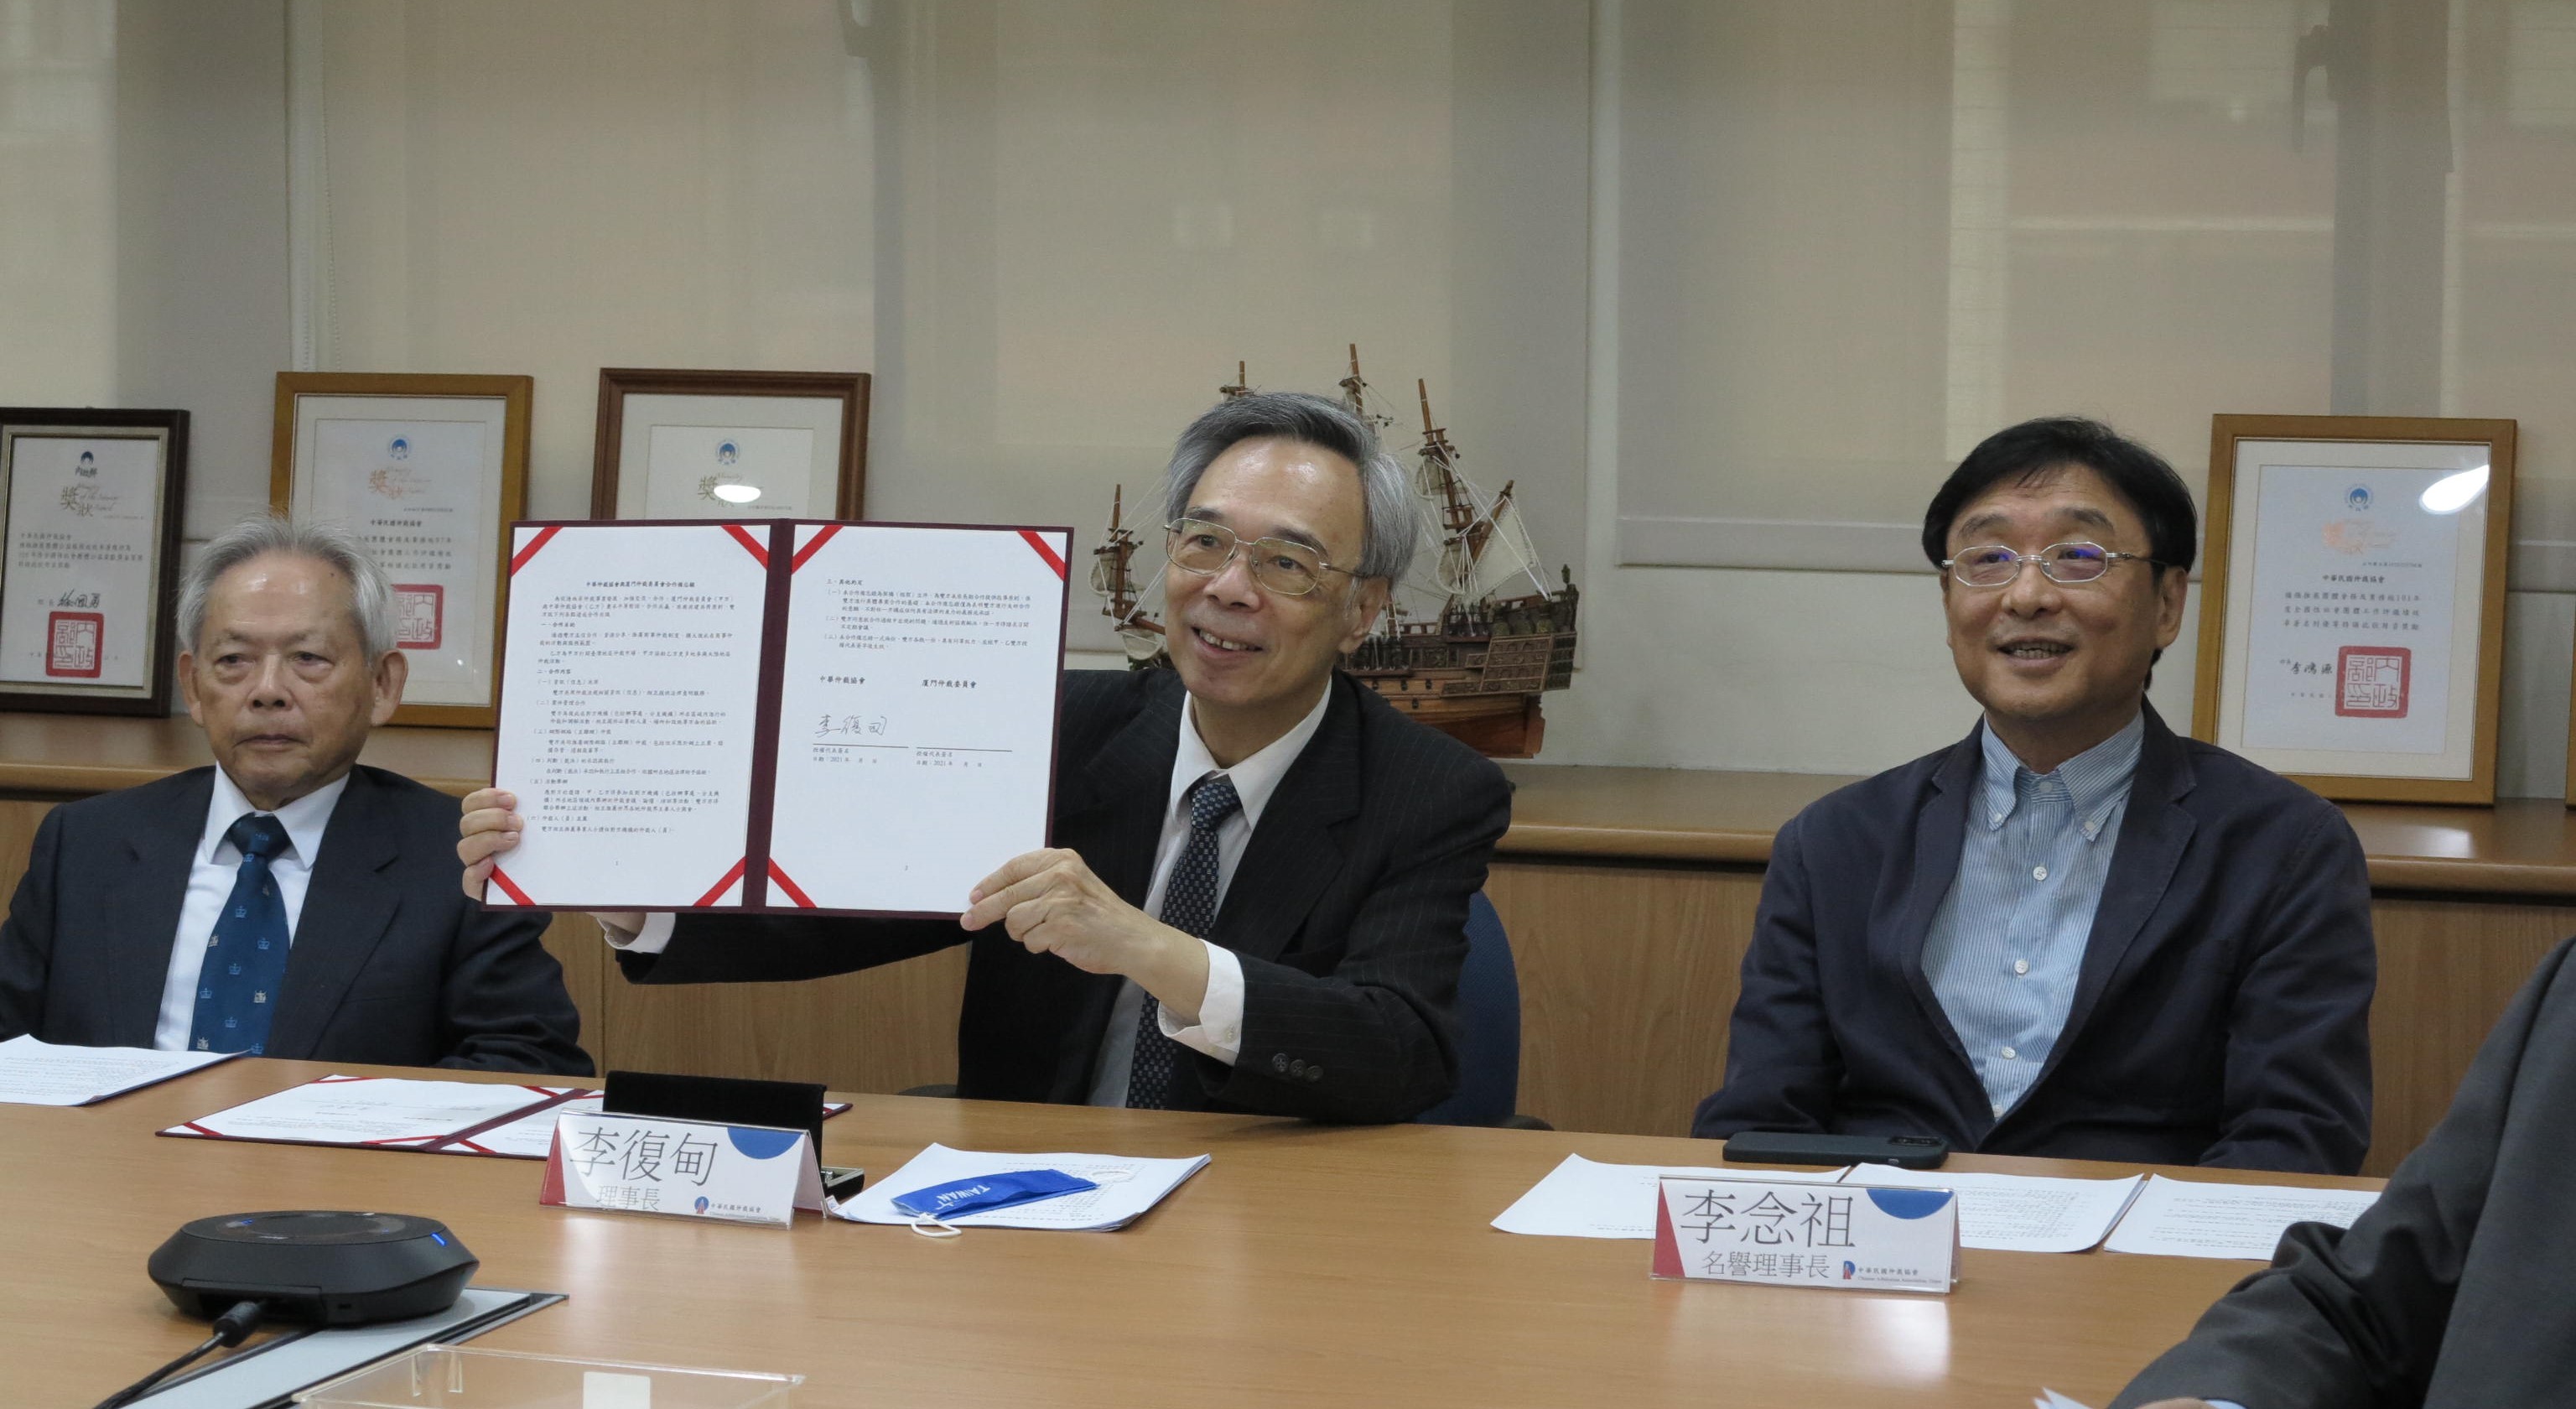 本會與廈門仲裁委員會簽署合作備忘錄 <br>CAA signs MOU with Xiamen Arbitration Commission (XMAC)